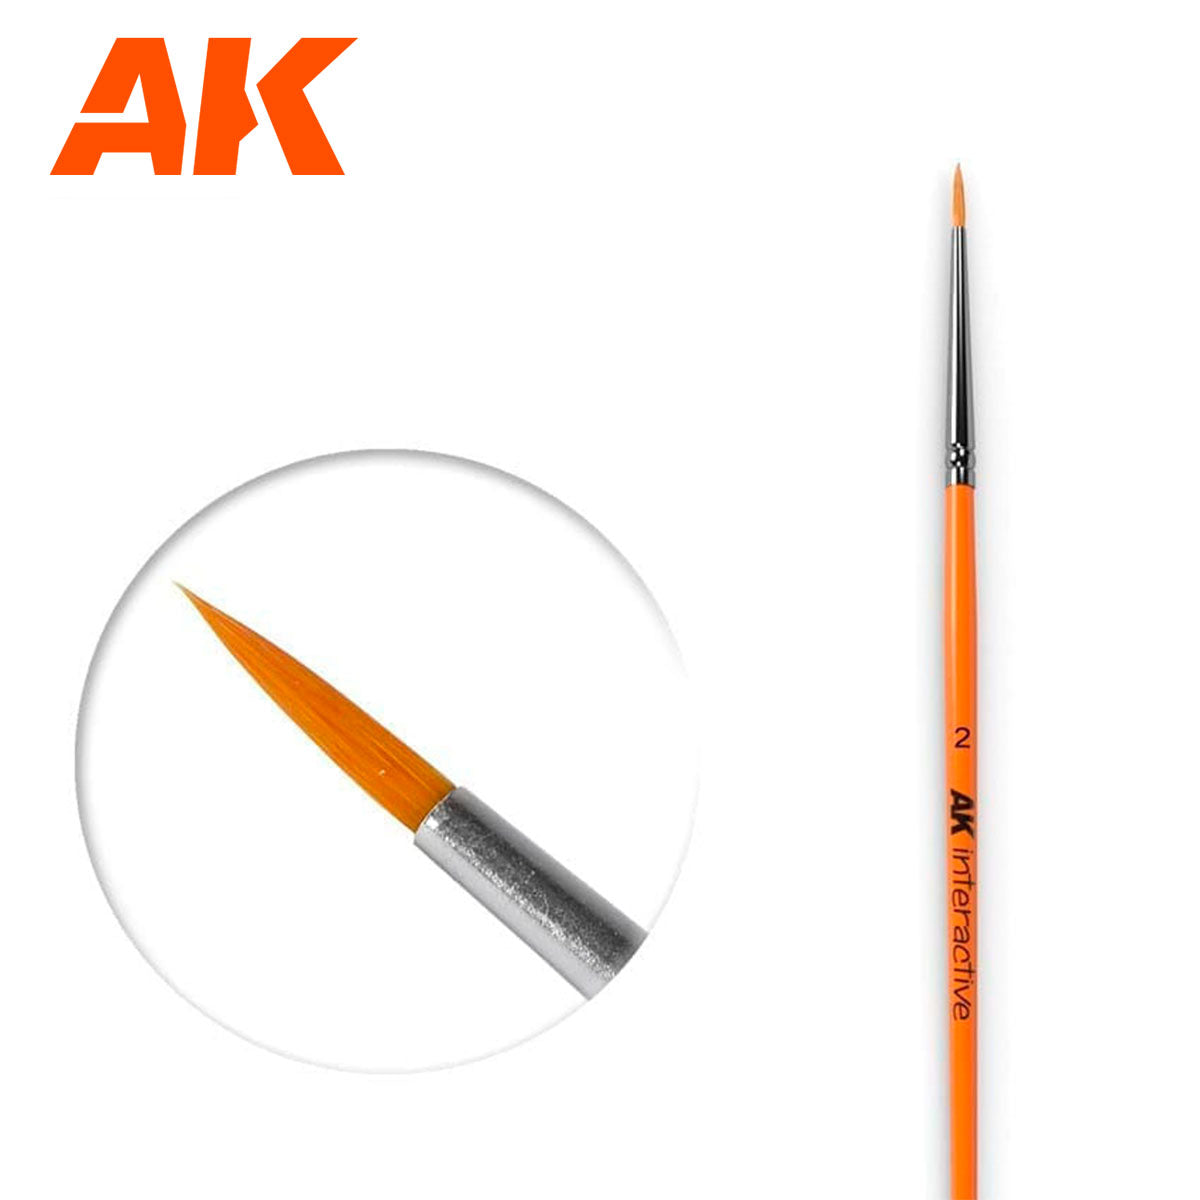 AK Round Brush No.2 (Synthetic)